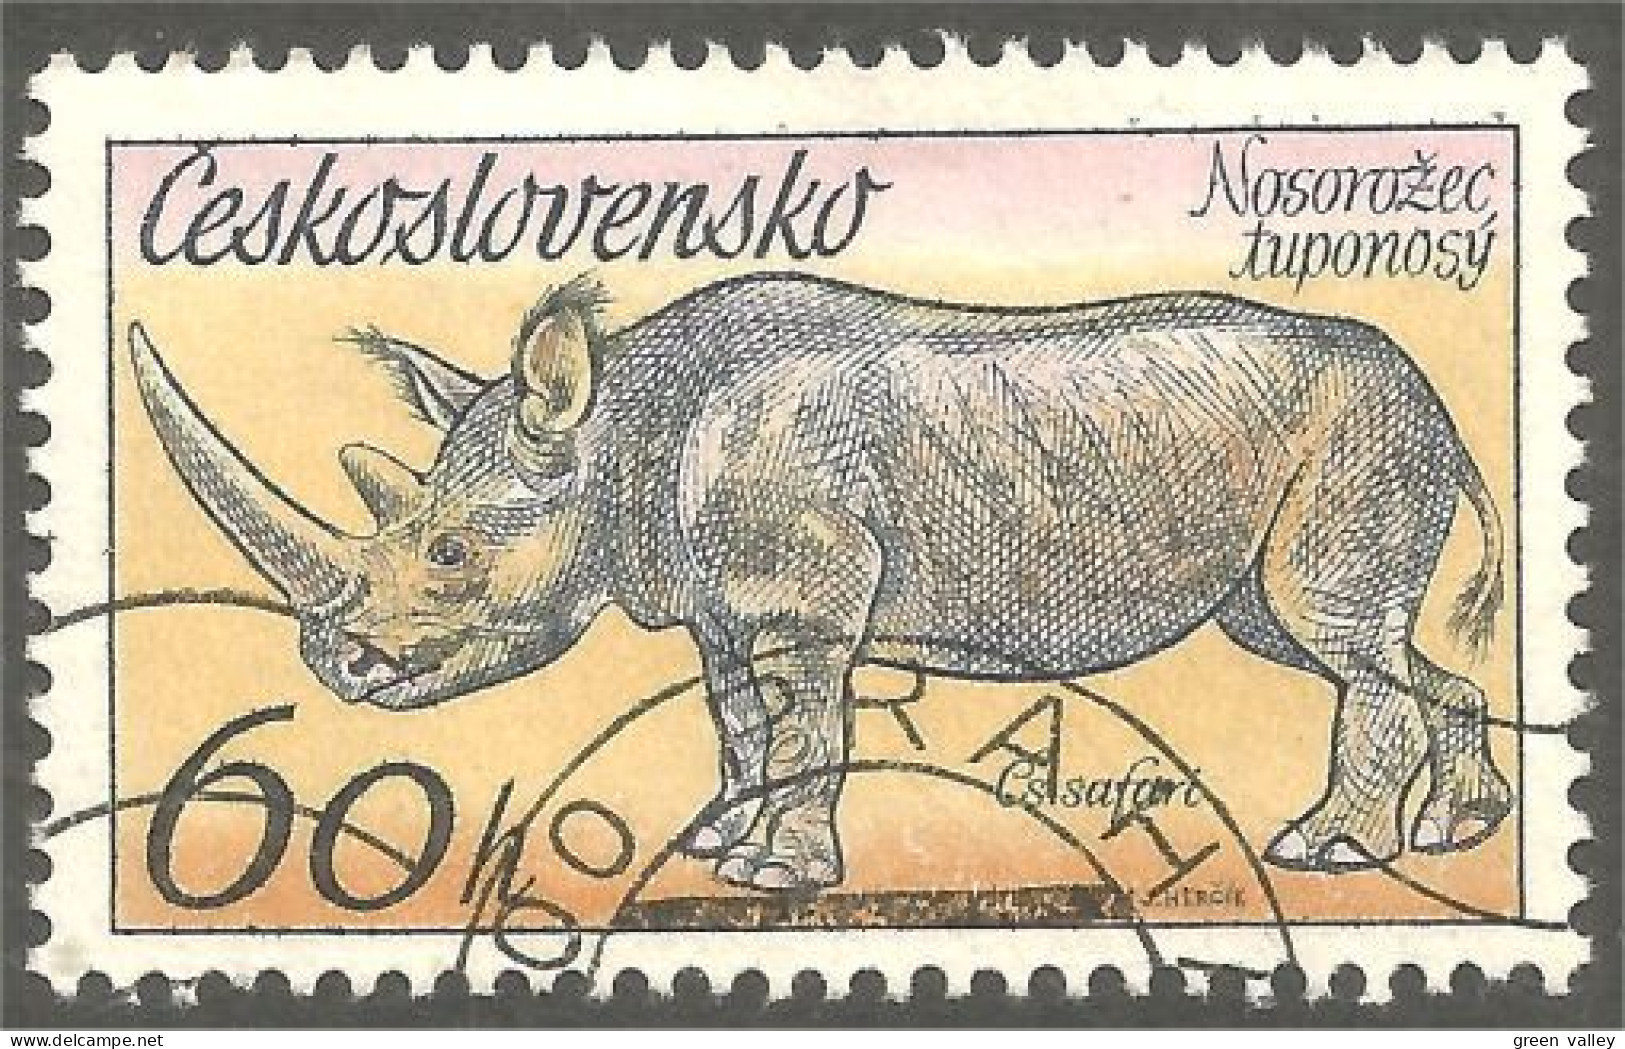 AS-13 Ceskoslovenko Rhinocéros Rinoceronte Nashorn Neushoorn - Rhinoceros